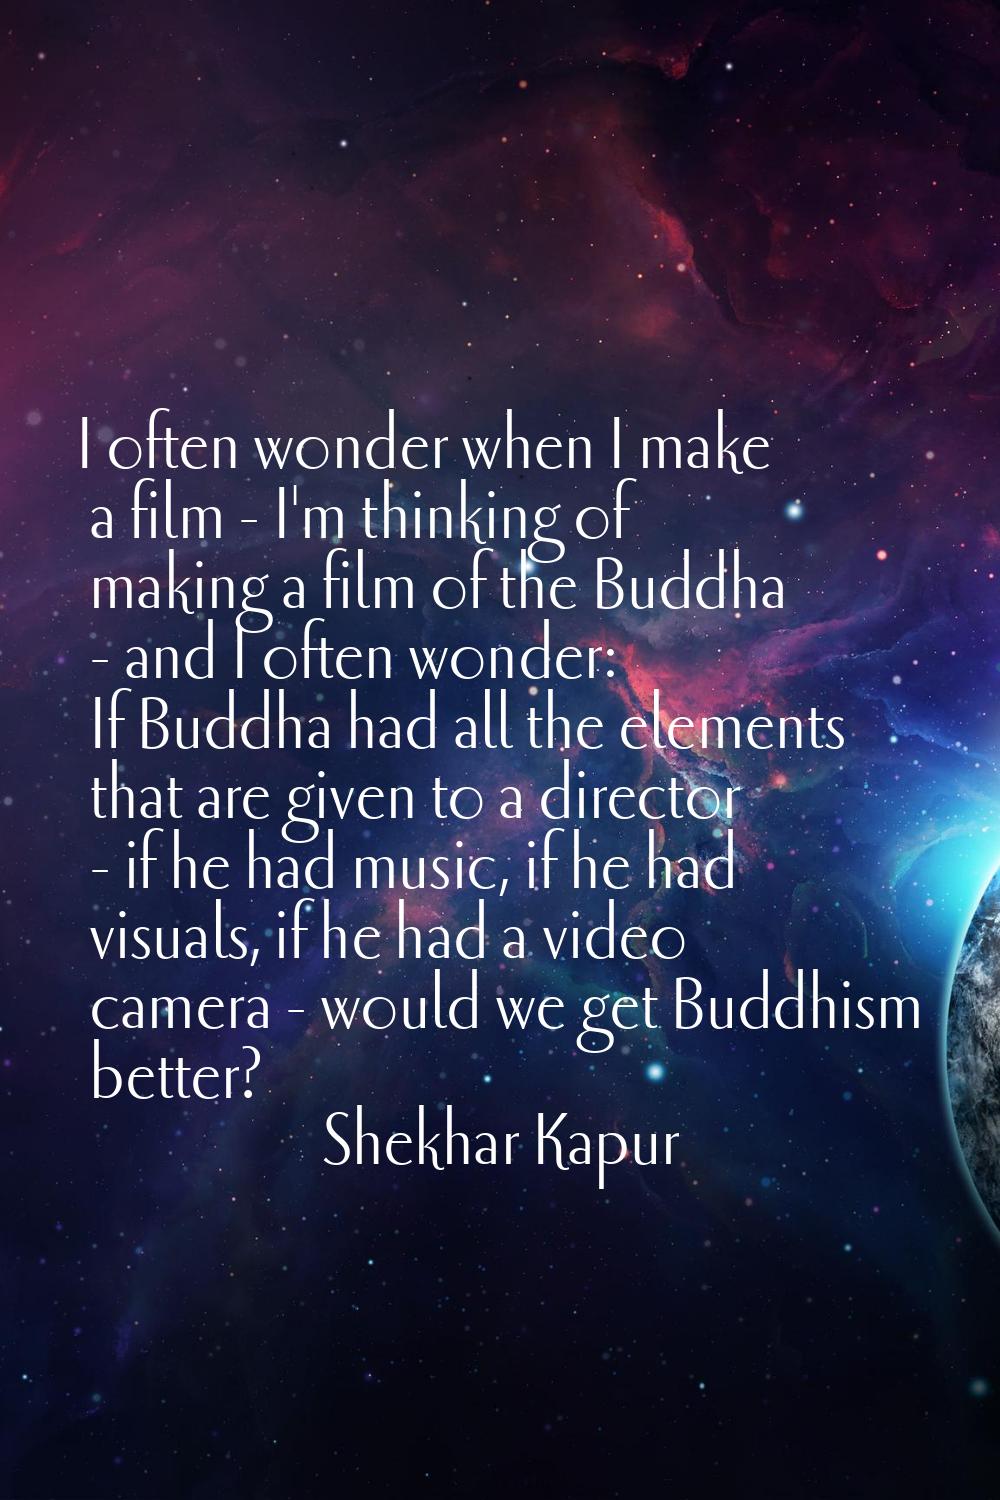 I often wonder when I make a film - I'm thinking of making a film of the Buddha - and I often wonde